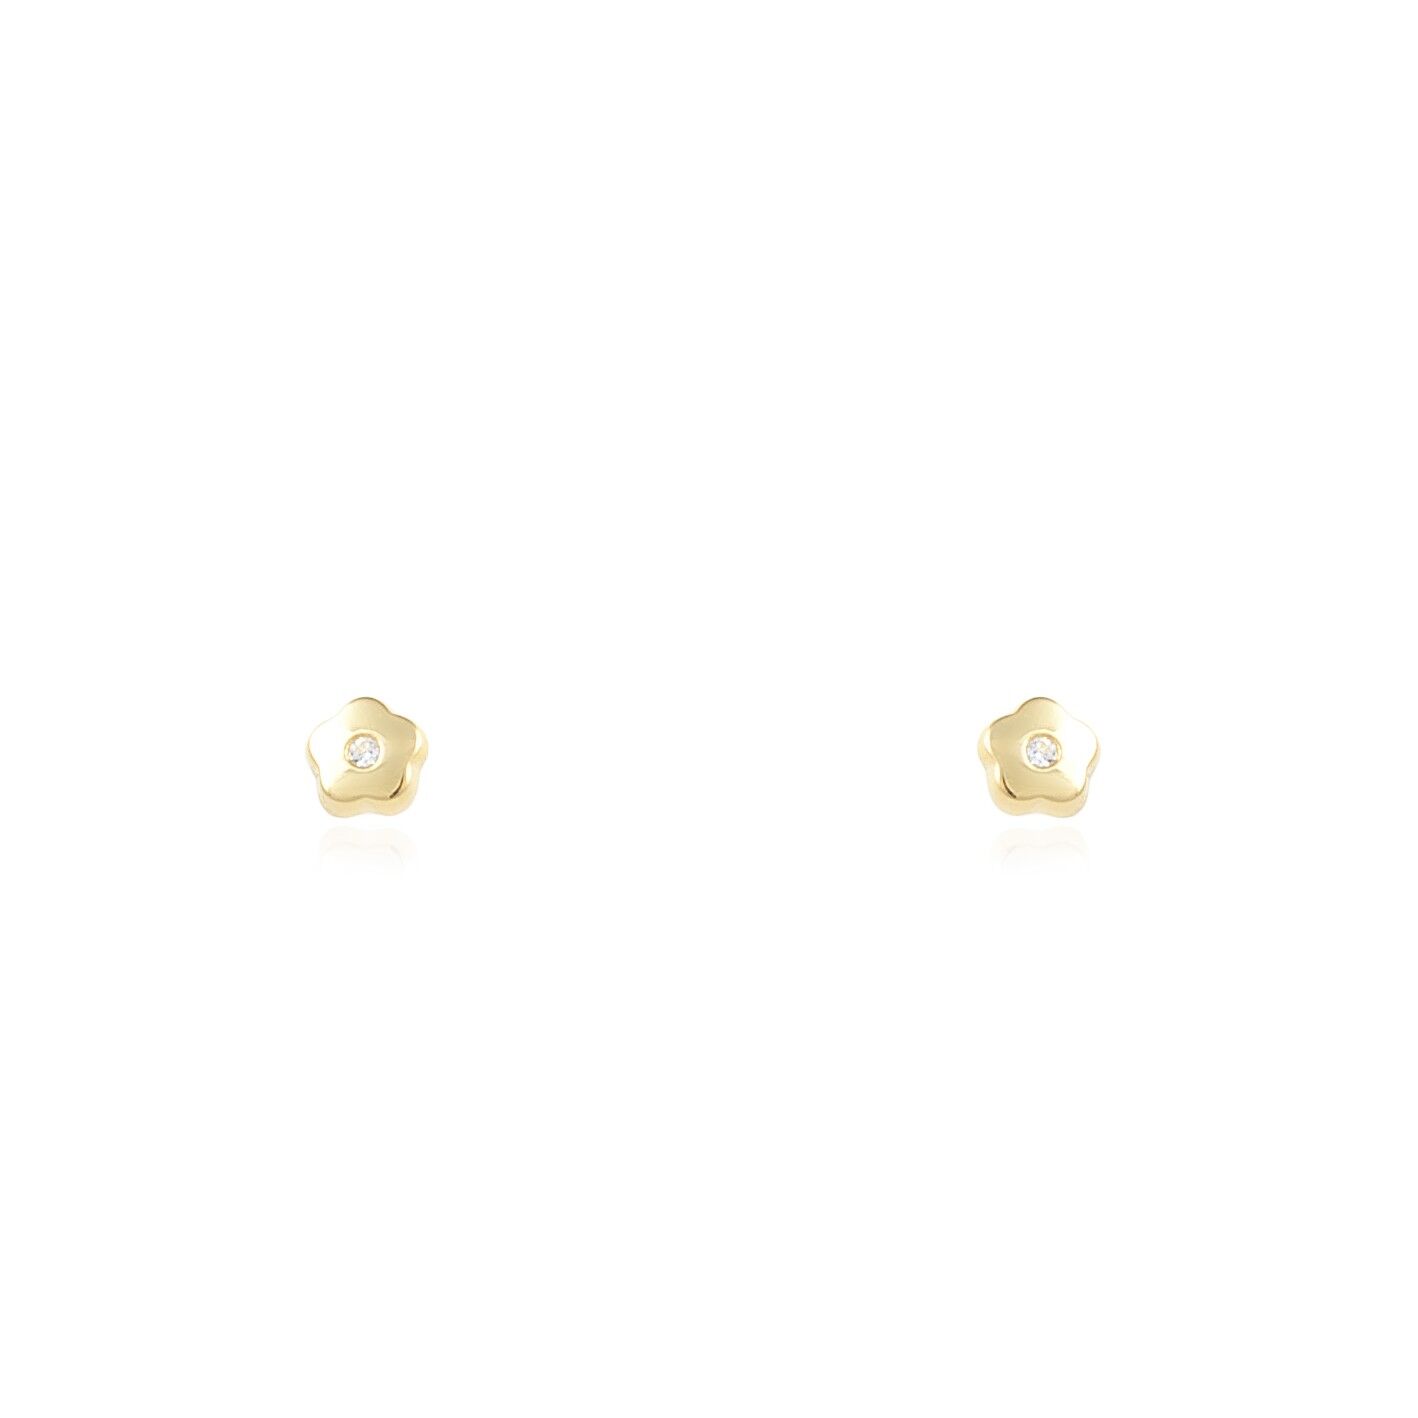 Gold & Pearl Daisy Earrings | Small Daisy Earrings